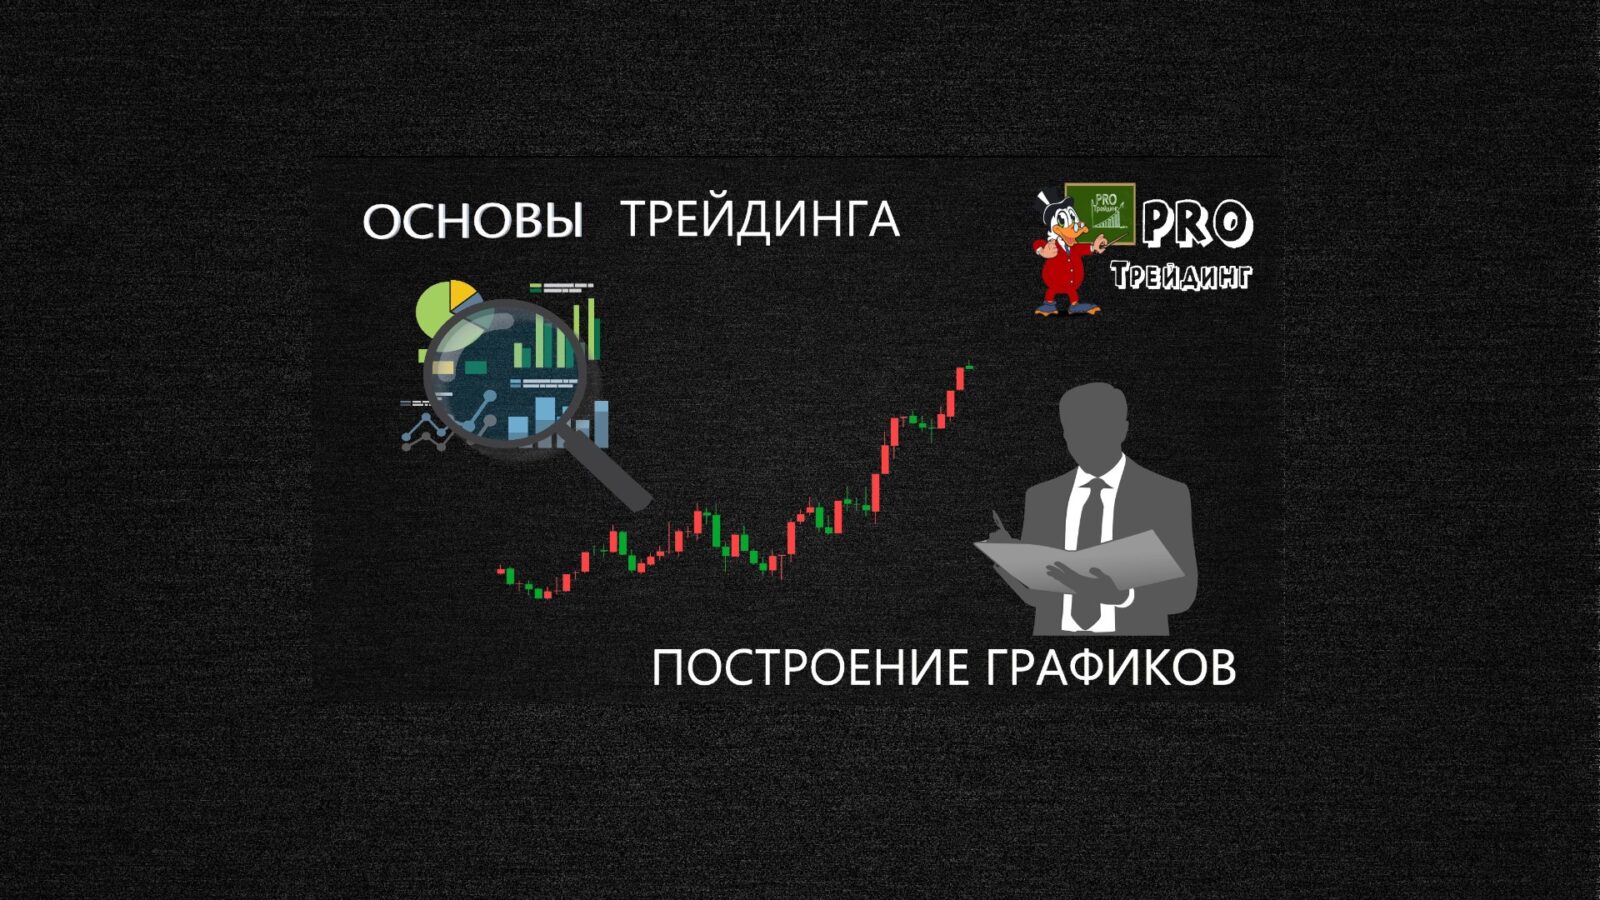 Интерактивные графики цен tradingview